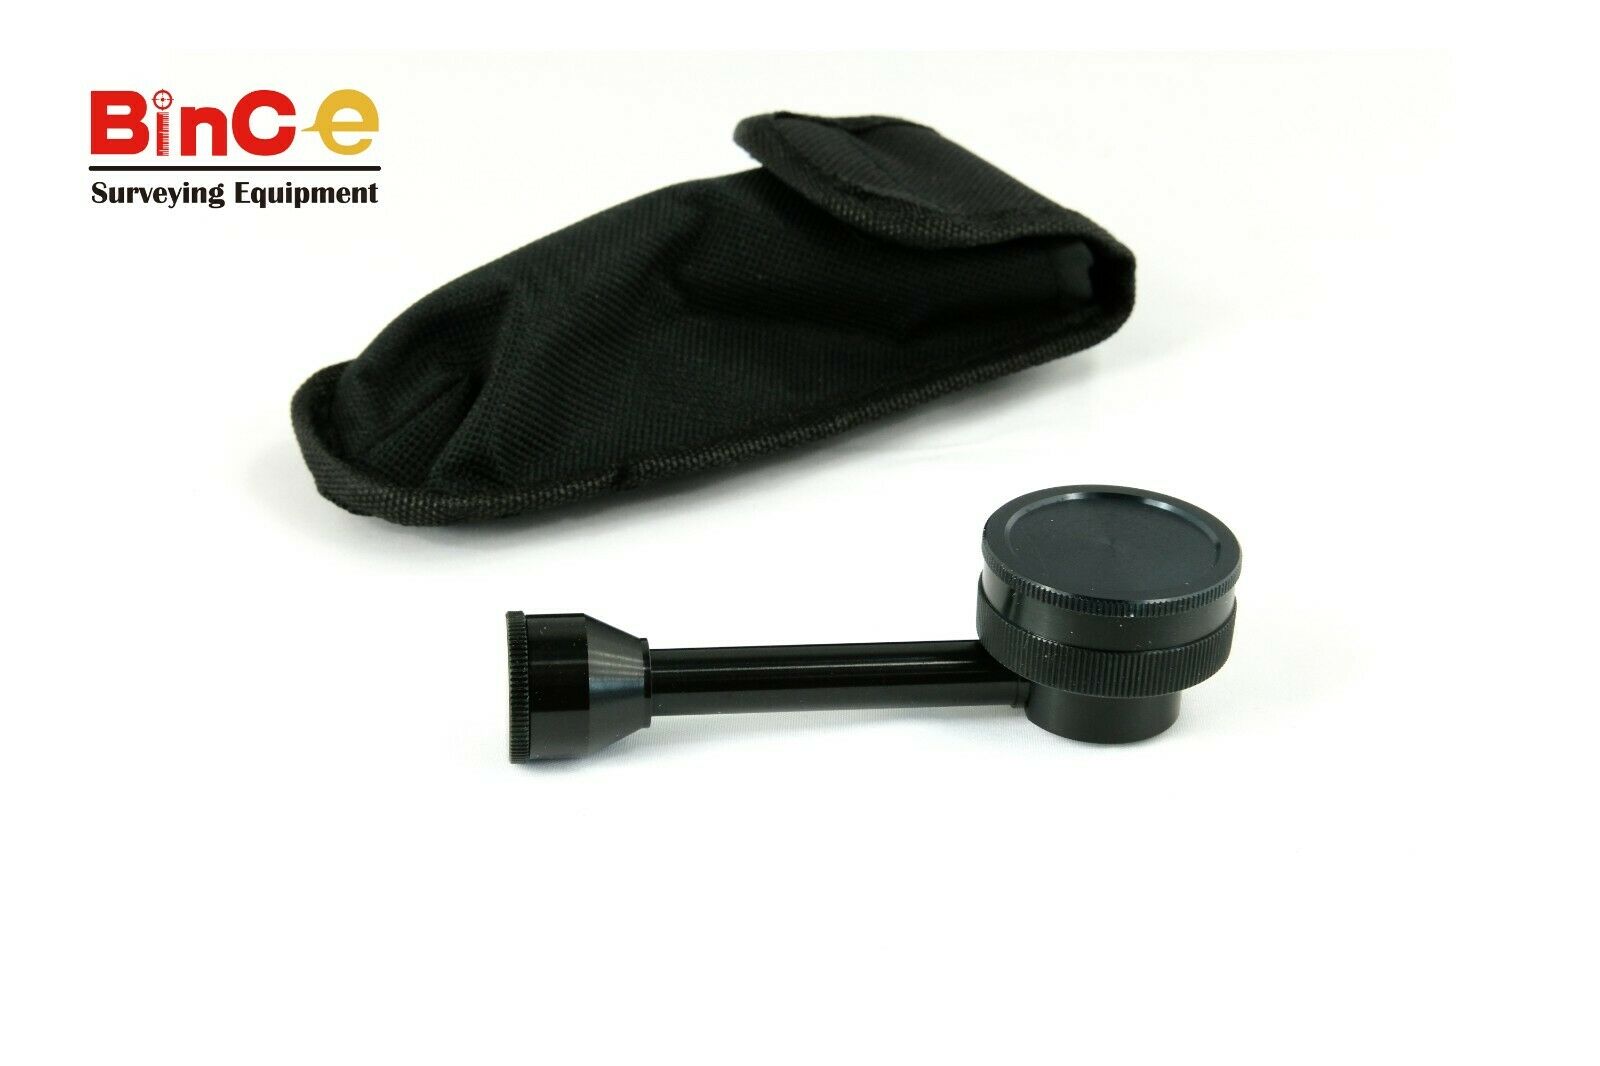 DE01 Theodolite Diagonal Eyepiece for Bince LDT-02 and LDT-02L Series